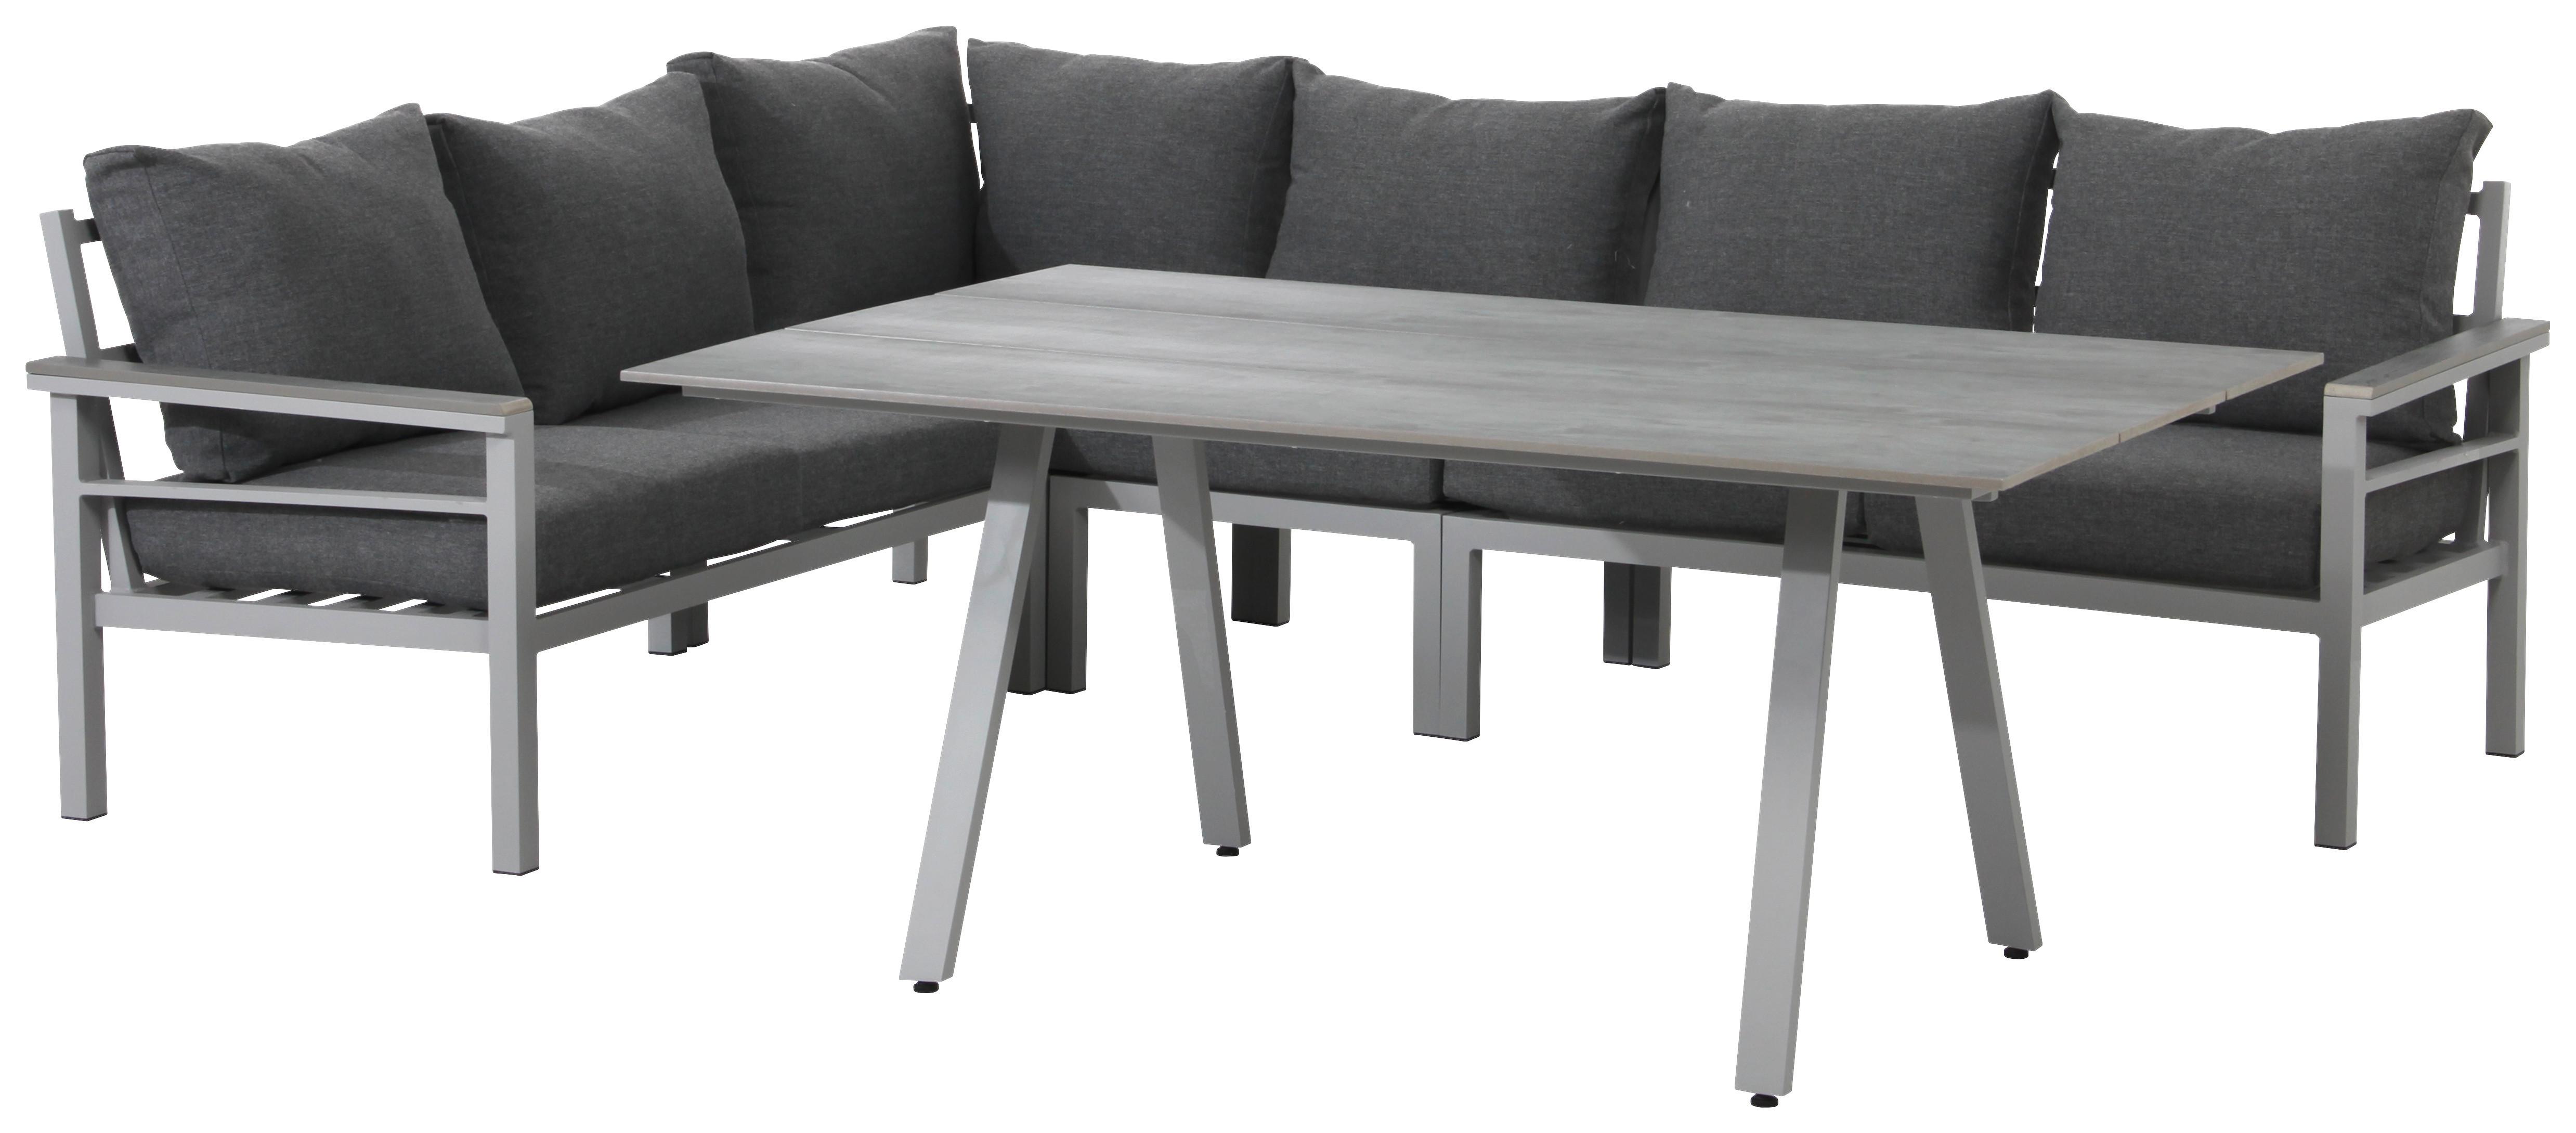 Lounge Garnitura Bari, Svetlo Siva - svetlo siva, Moderno, kovina/umetna masa (199/259cm) - Beldano